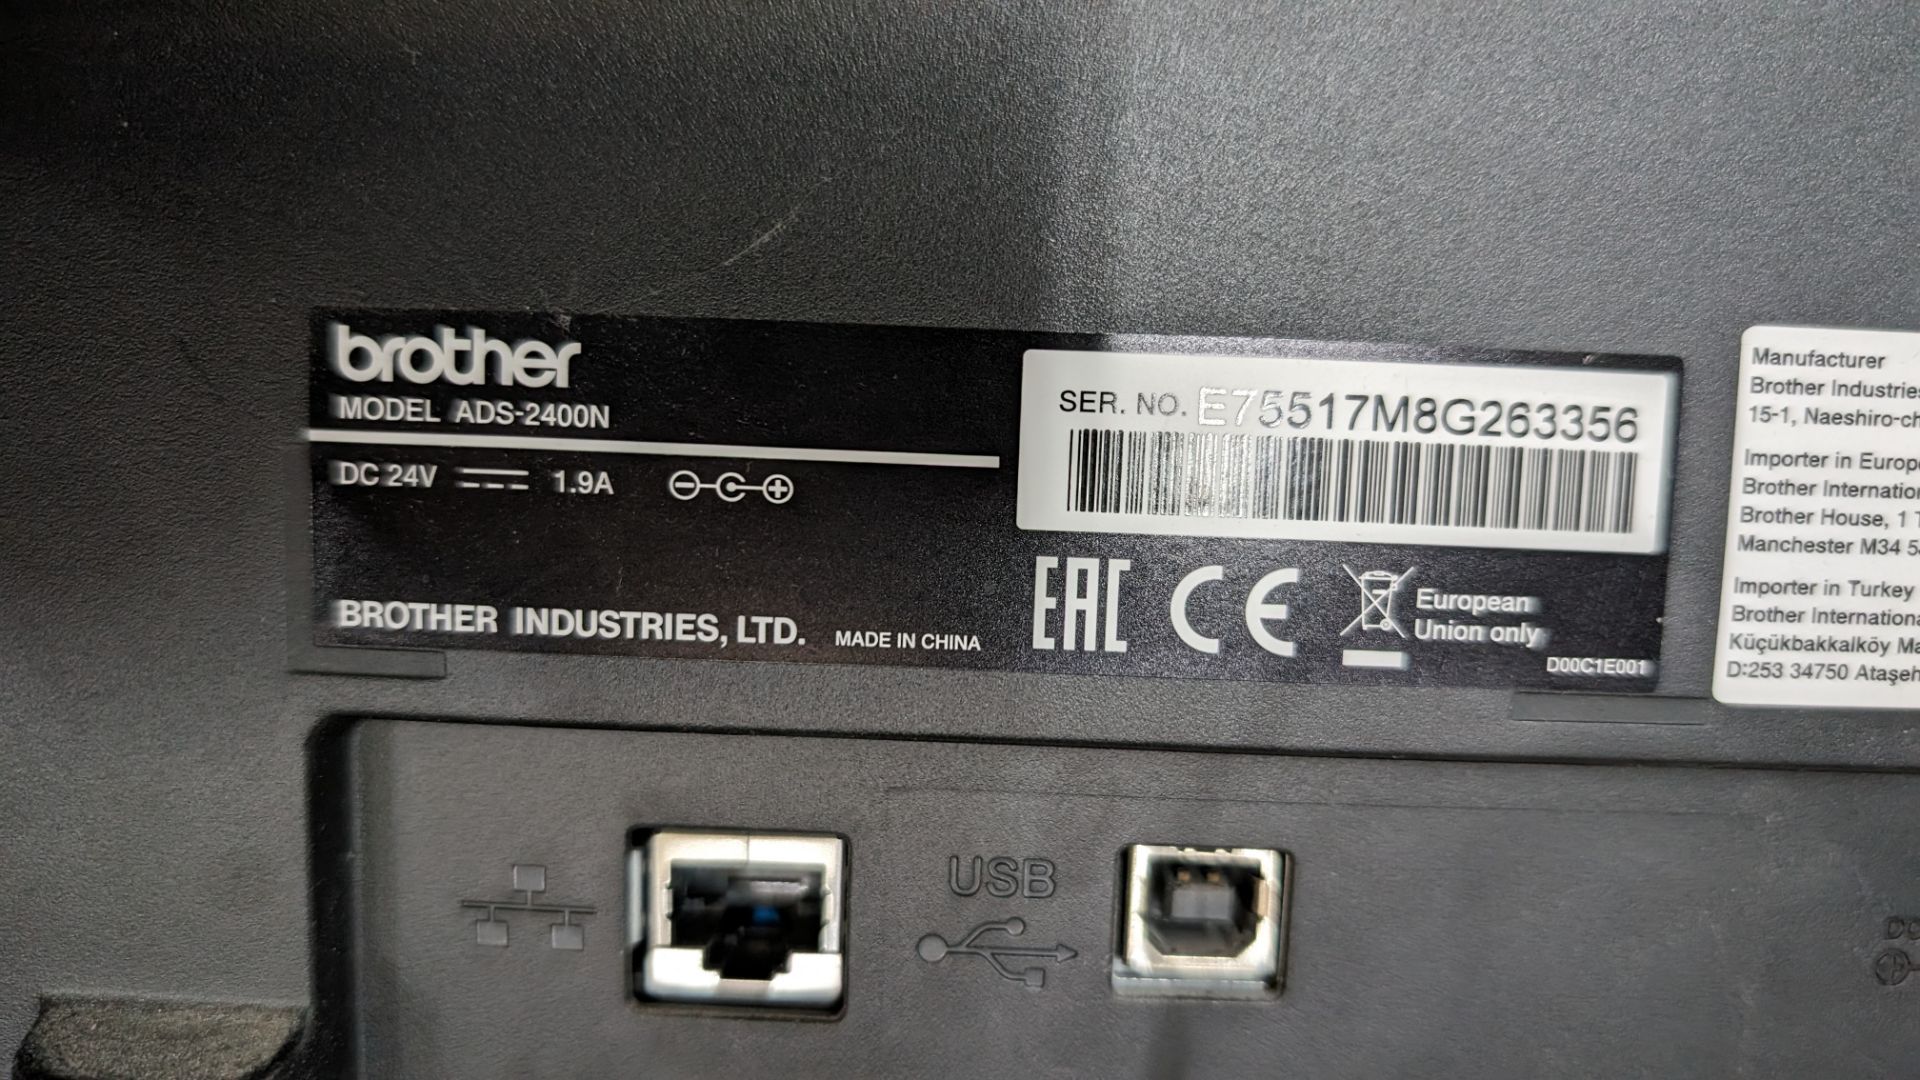 Brother ADS-2400N scanner - Image 8 of 9